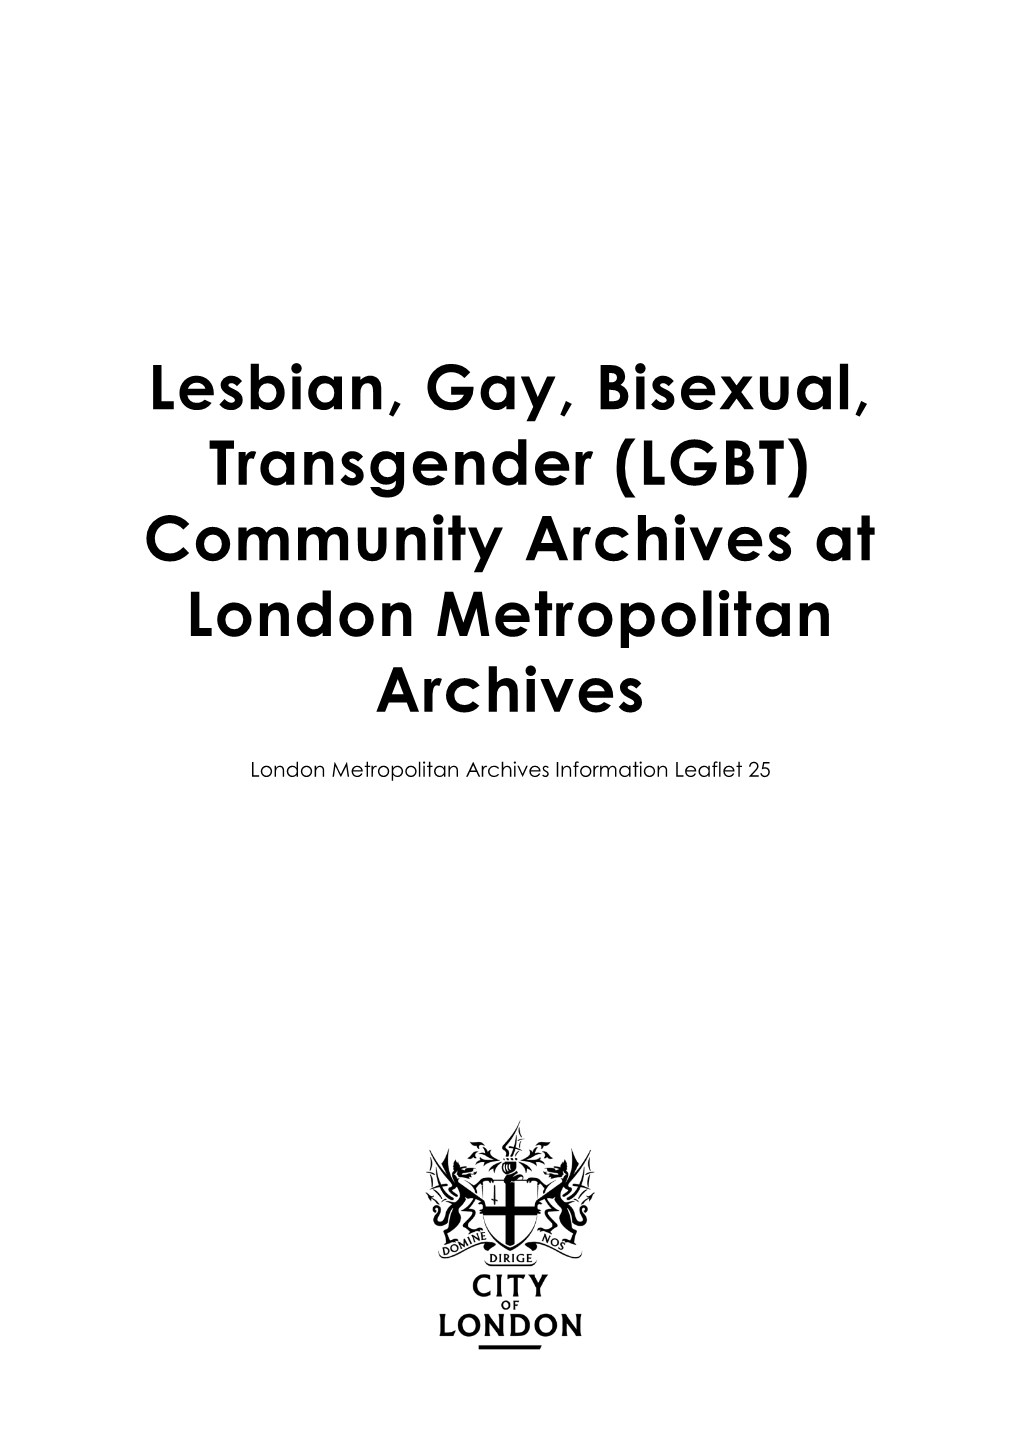 (LGBT) Community Archives at London Metropolitan Archives